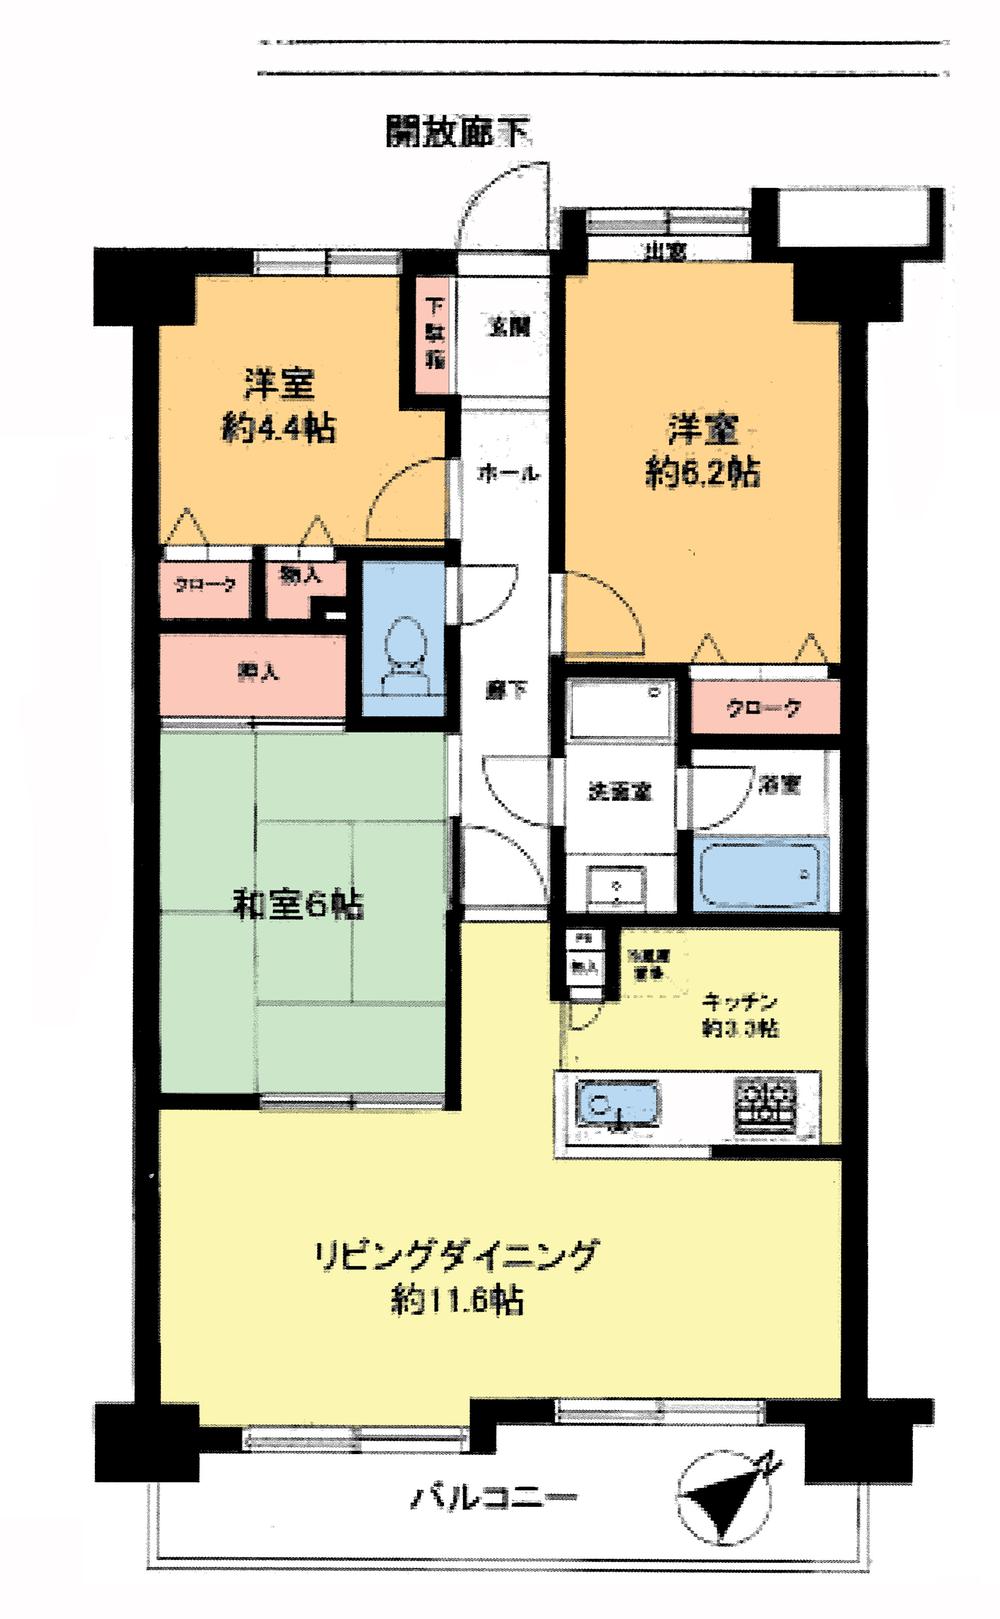 Floor plan. 3LDK, Price 15.8 million yen, Footprint 68.2 sq m , Balcony area 8.68 sq m floor plan